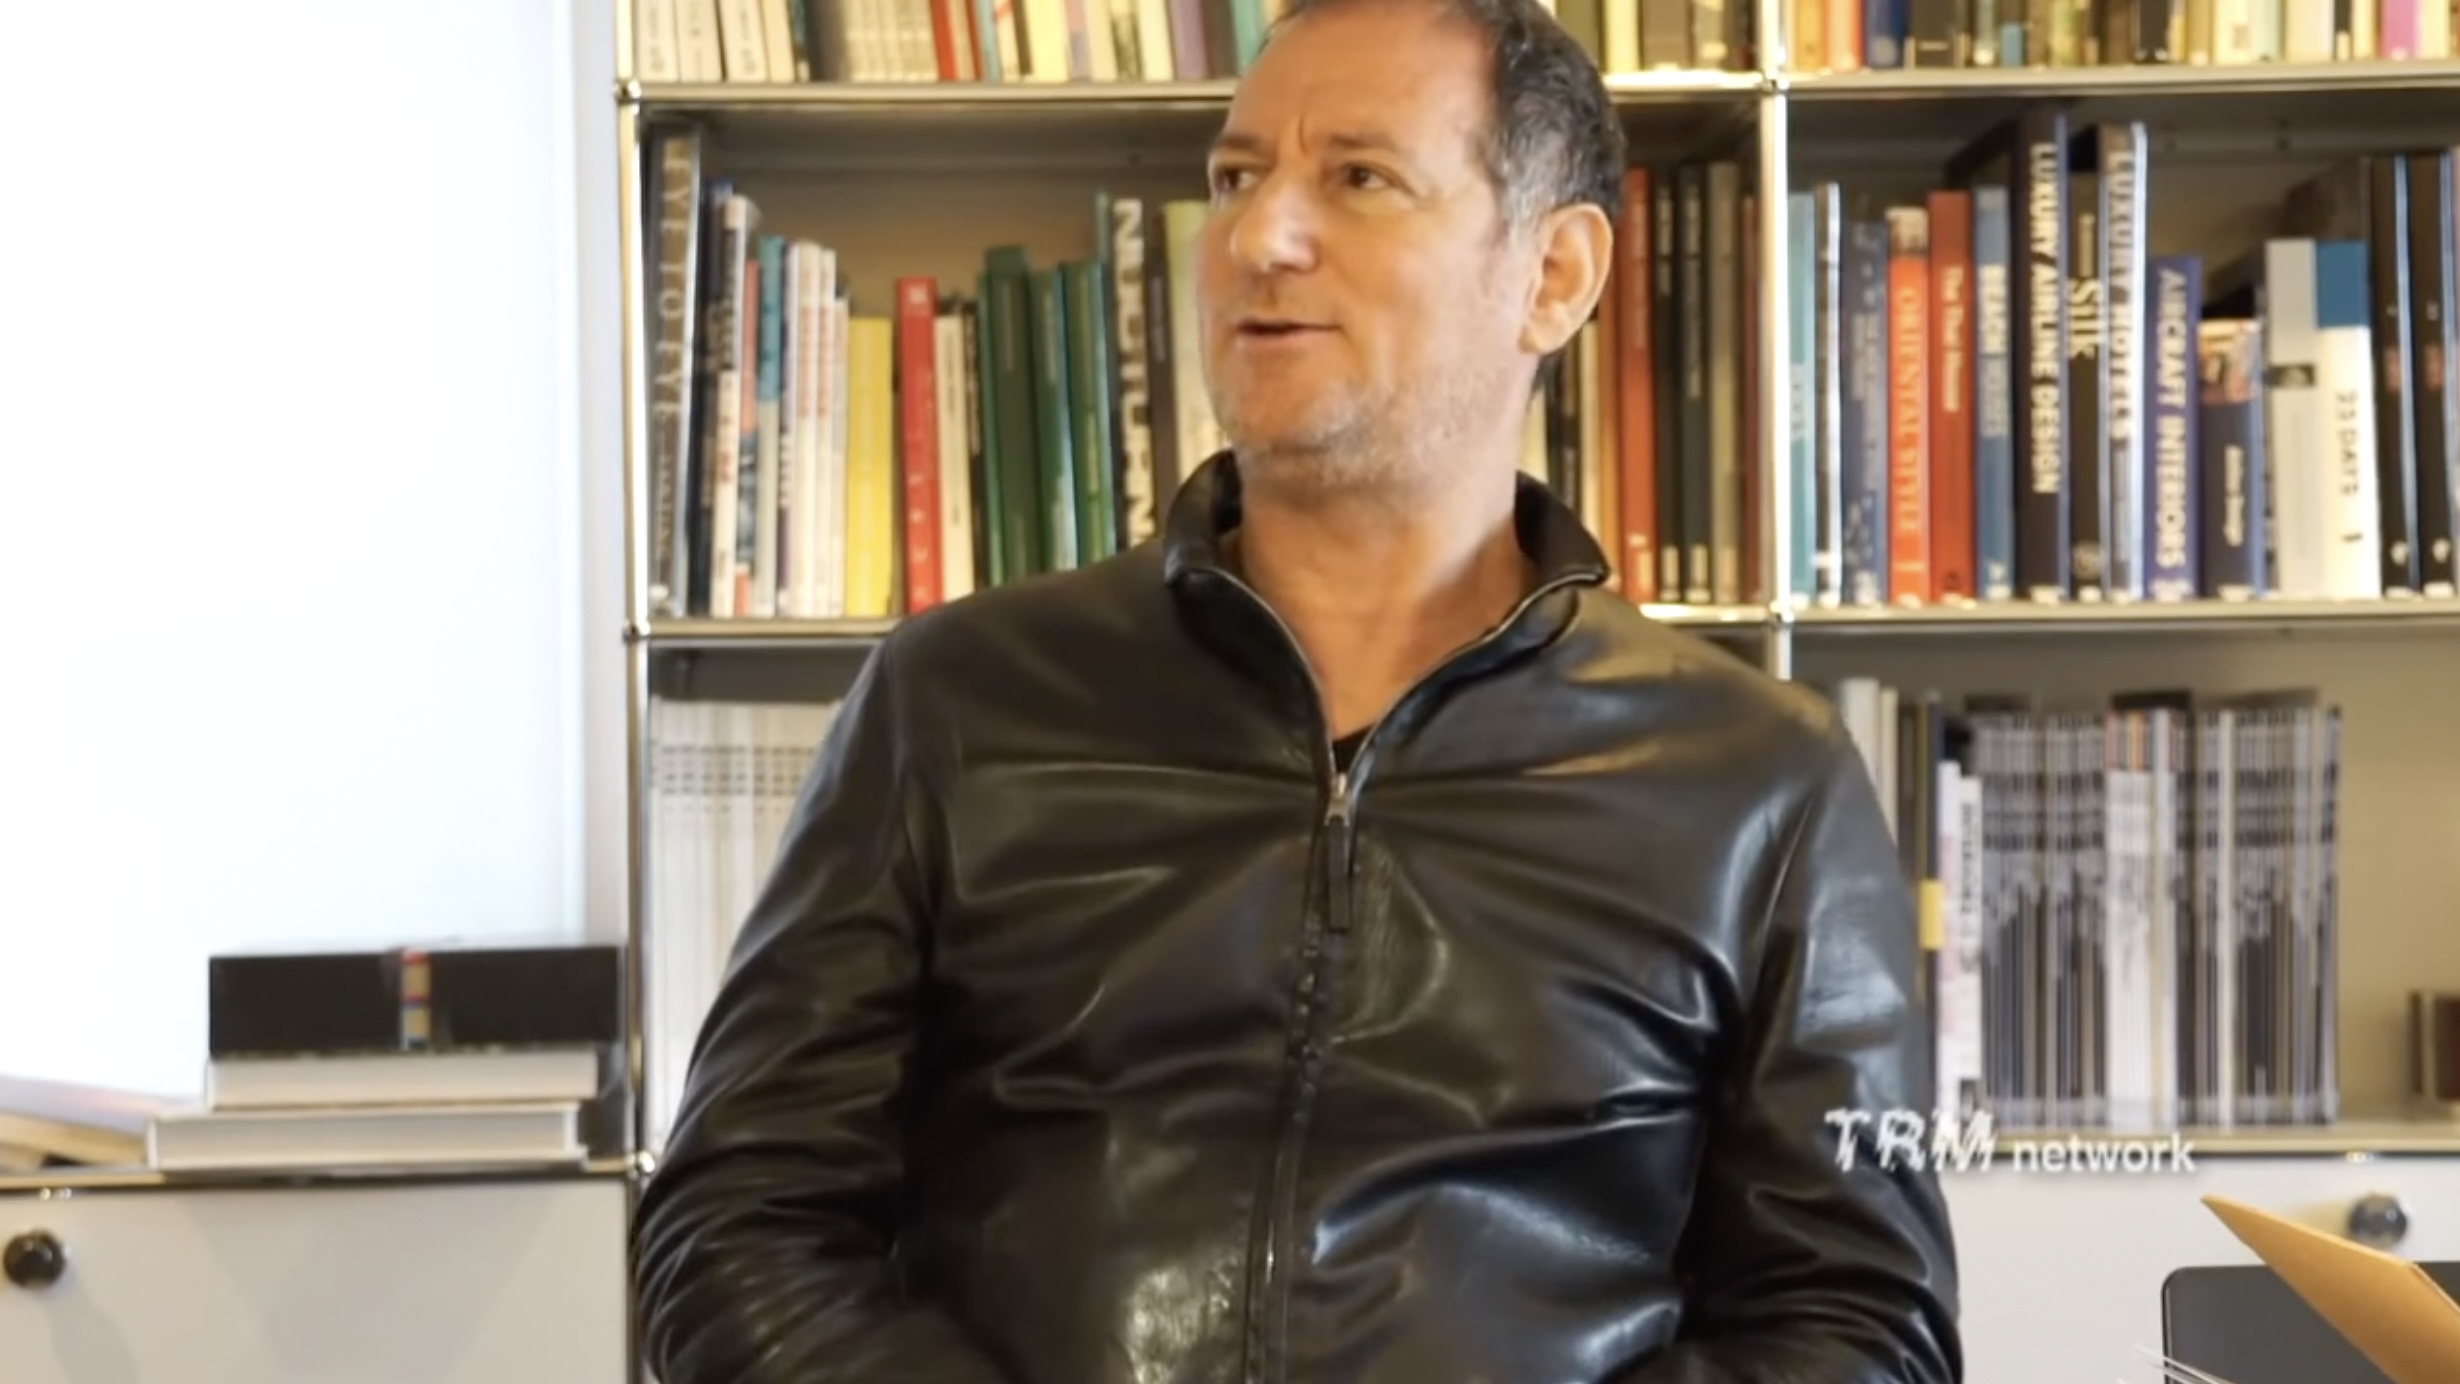 Italian TRM Network interview Riccardo Tossani